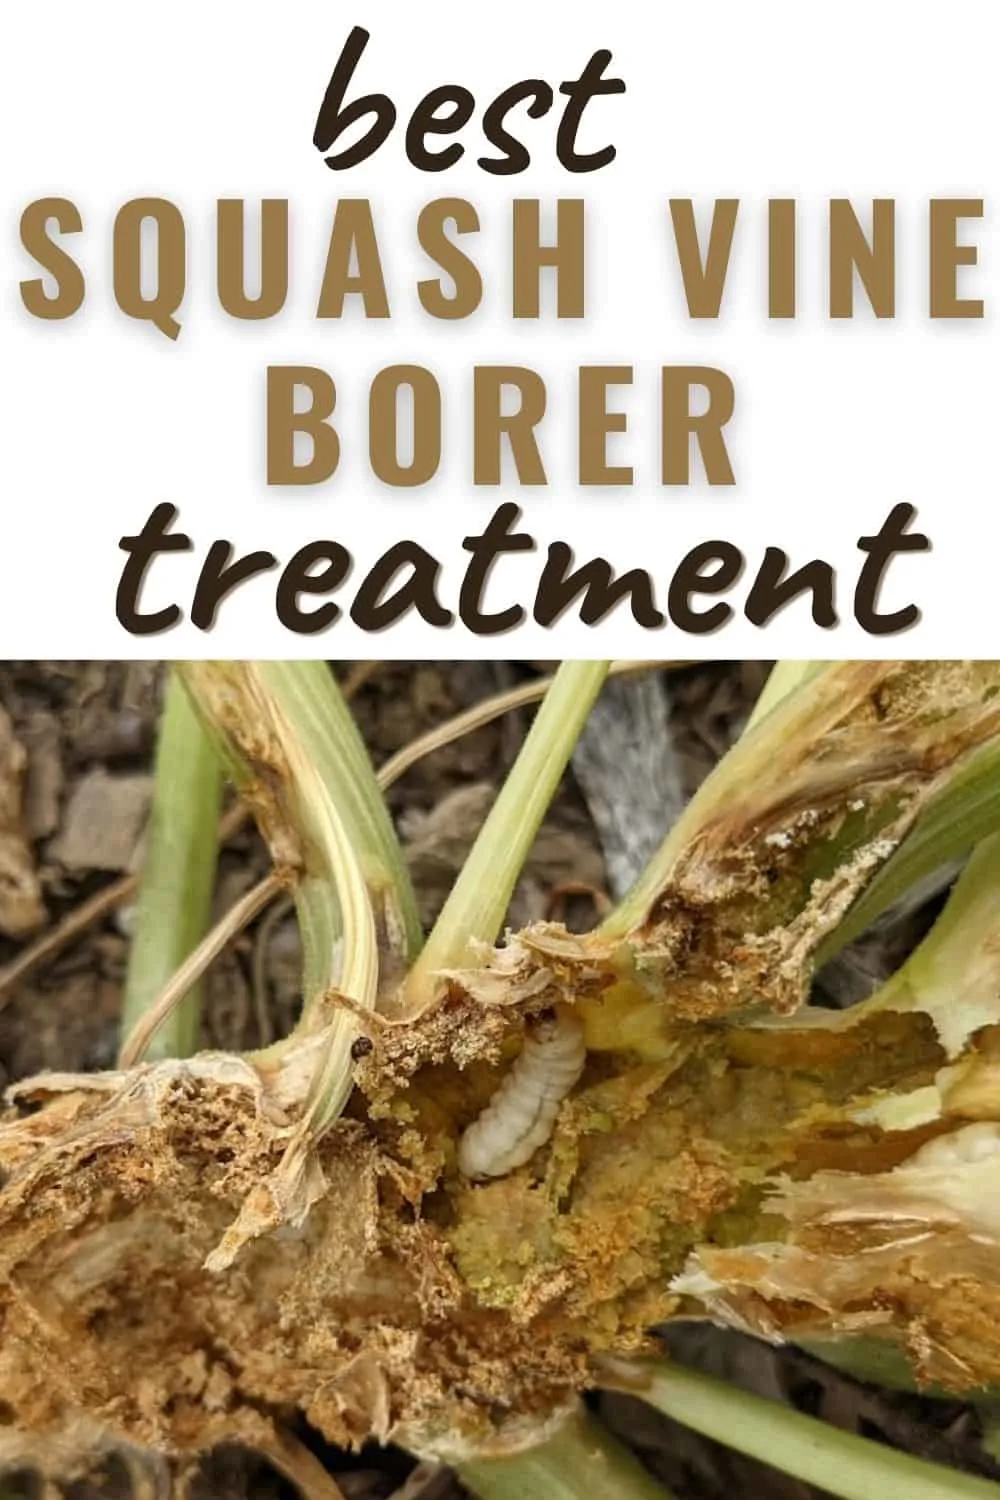 Best squash vine borer treatment